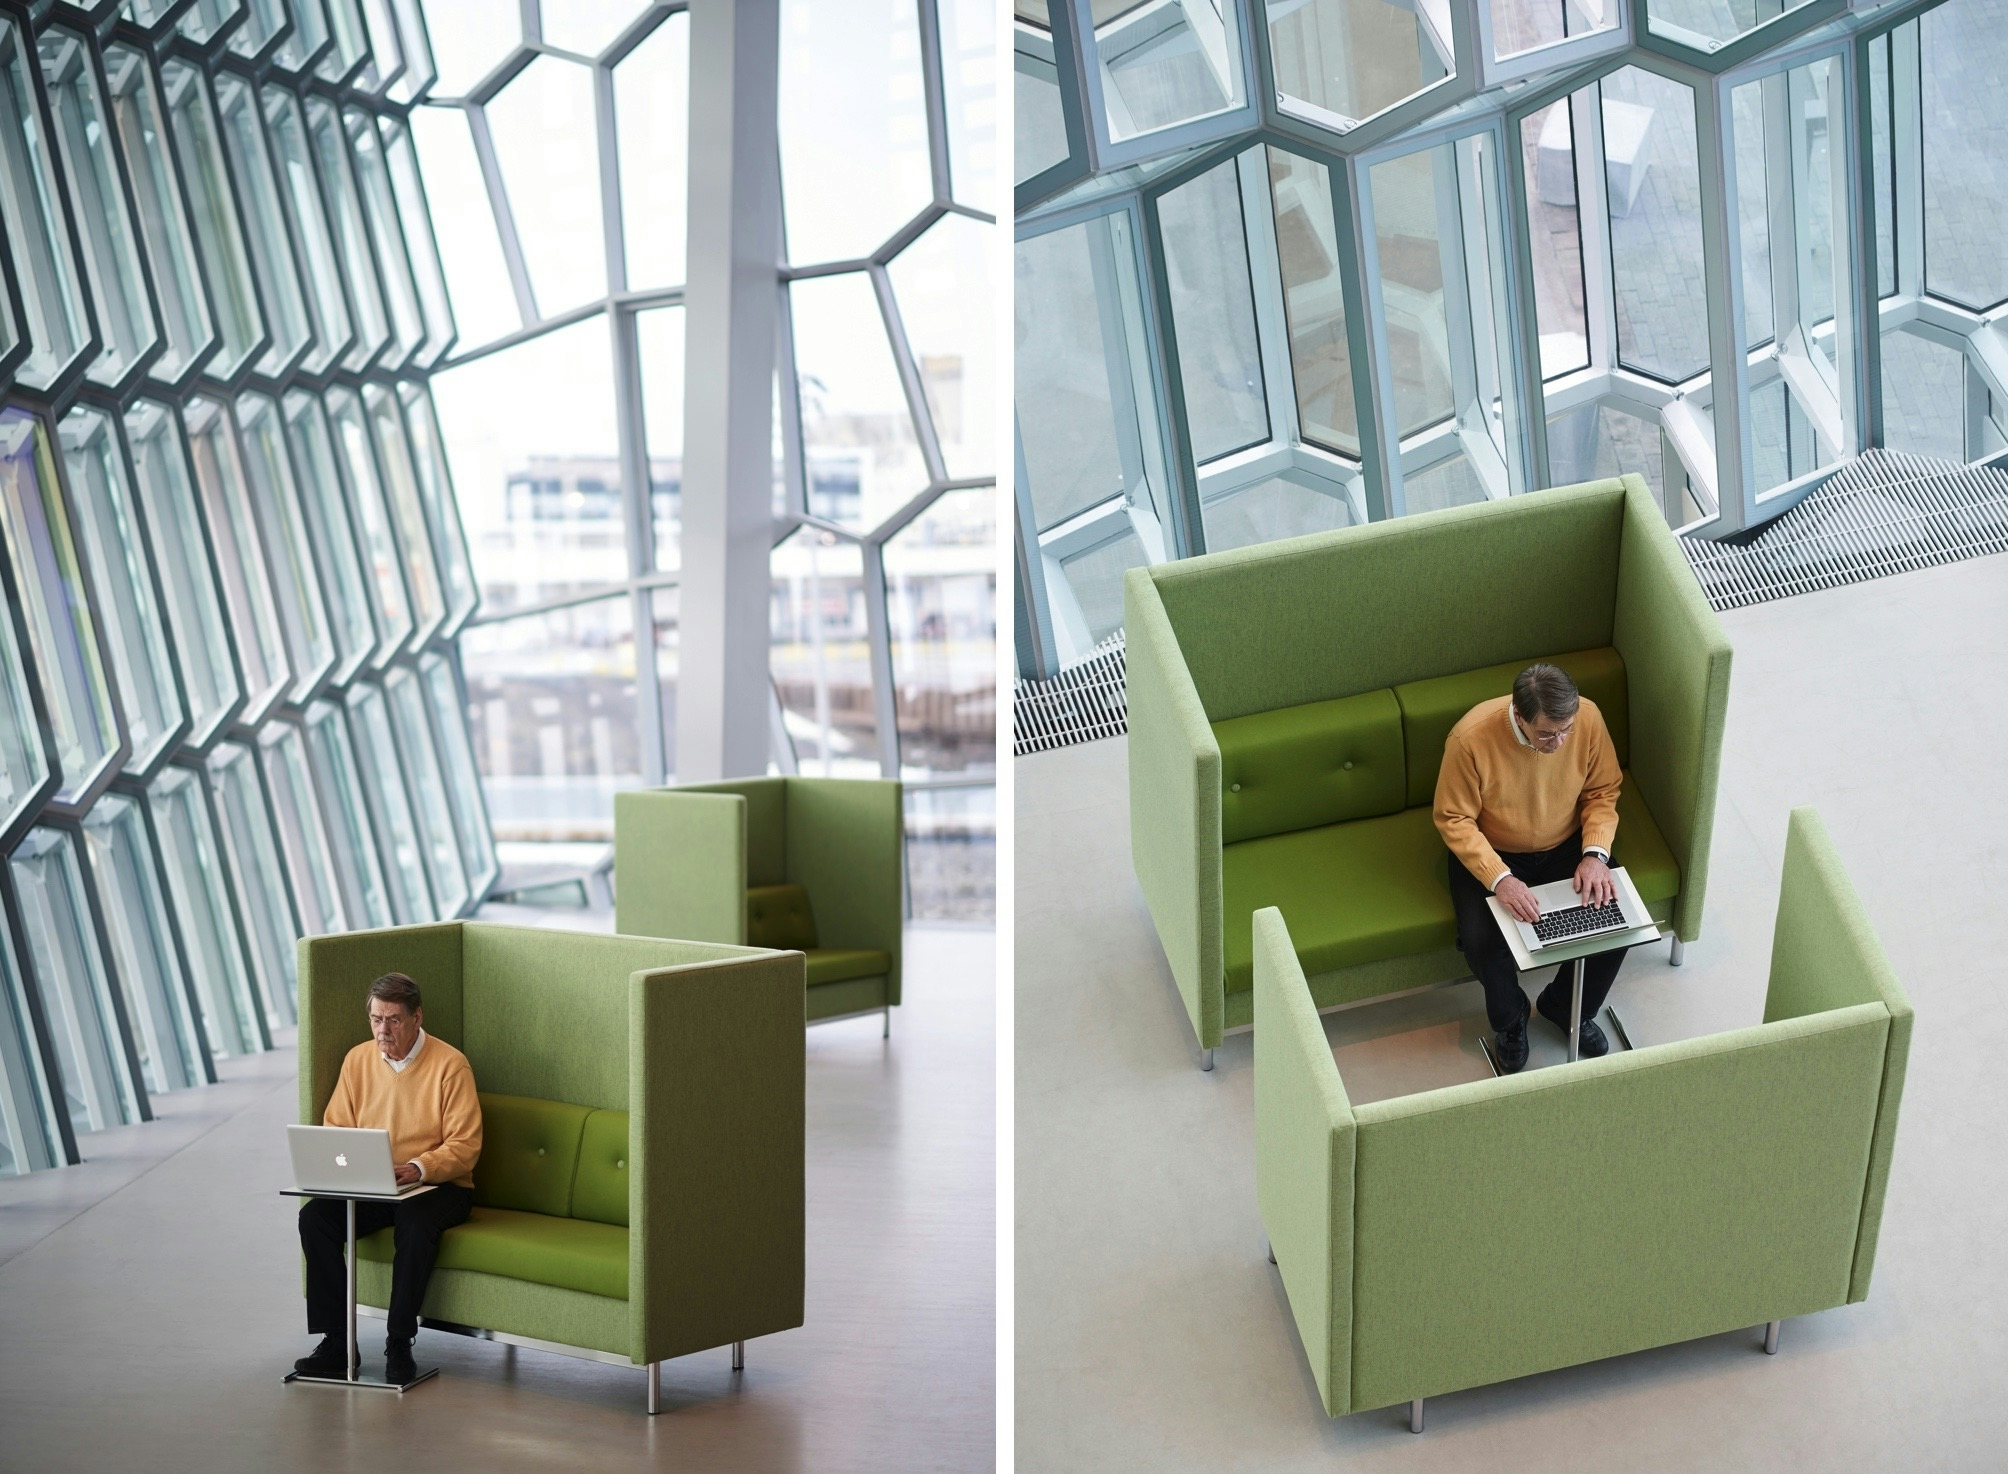 Einrúm sofa for Axis Furniture - Premiered at DesignMarch 2013